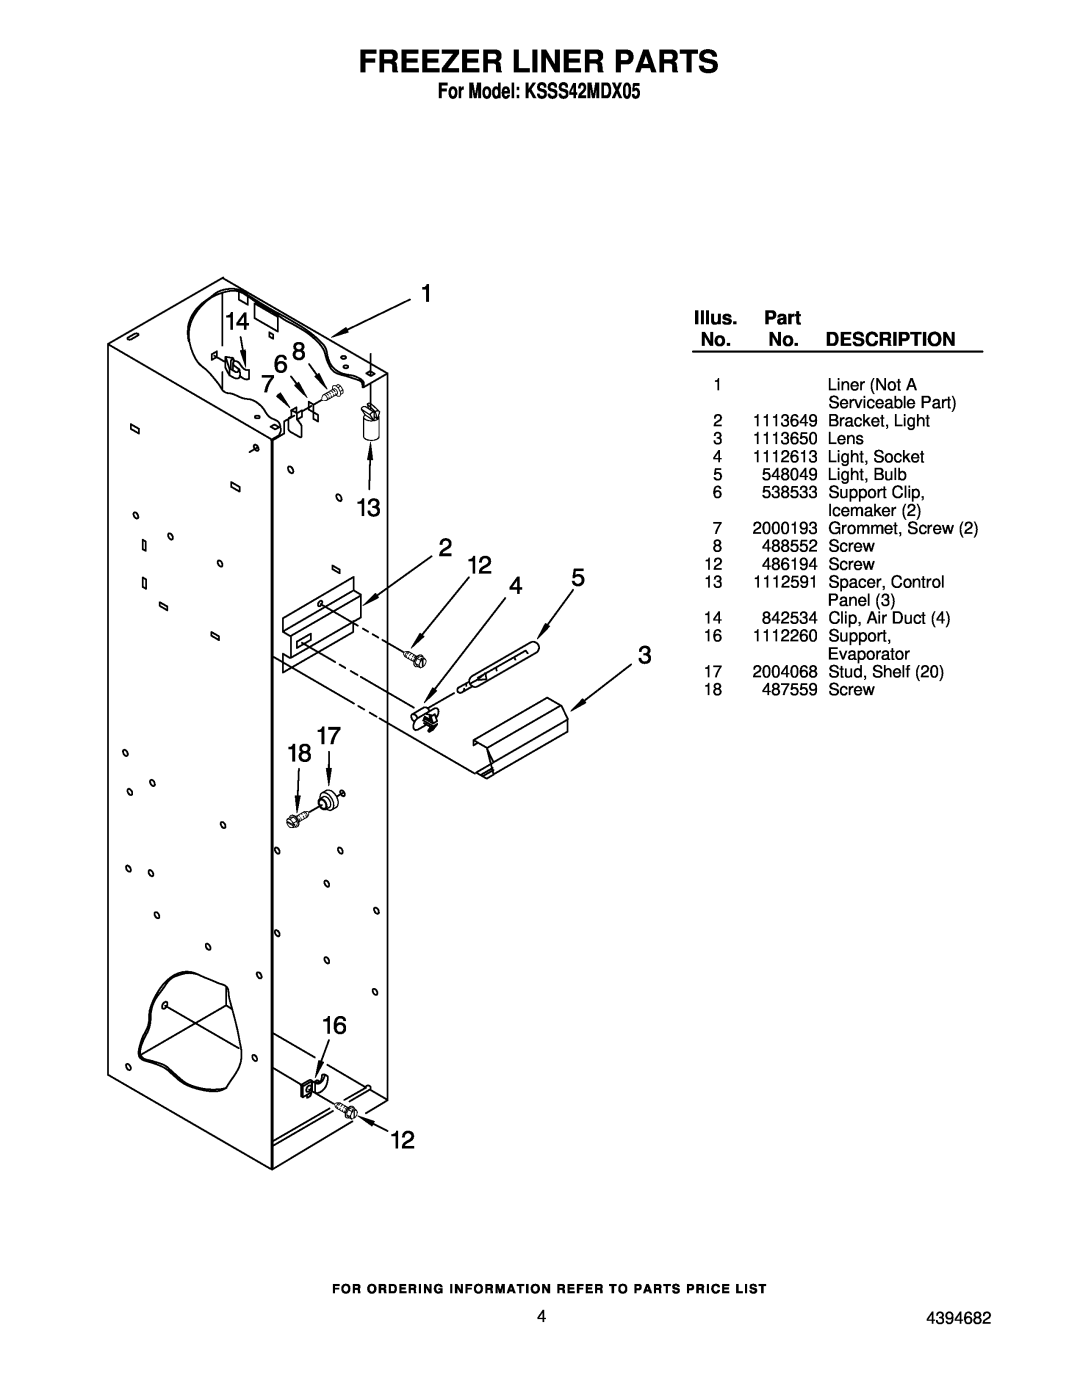 KitchenAid manual Freezer Liner Parts, For Model KSSS42MDX05, Illus, Description 